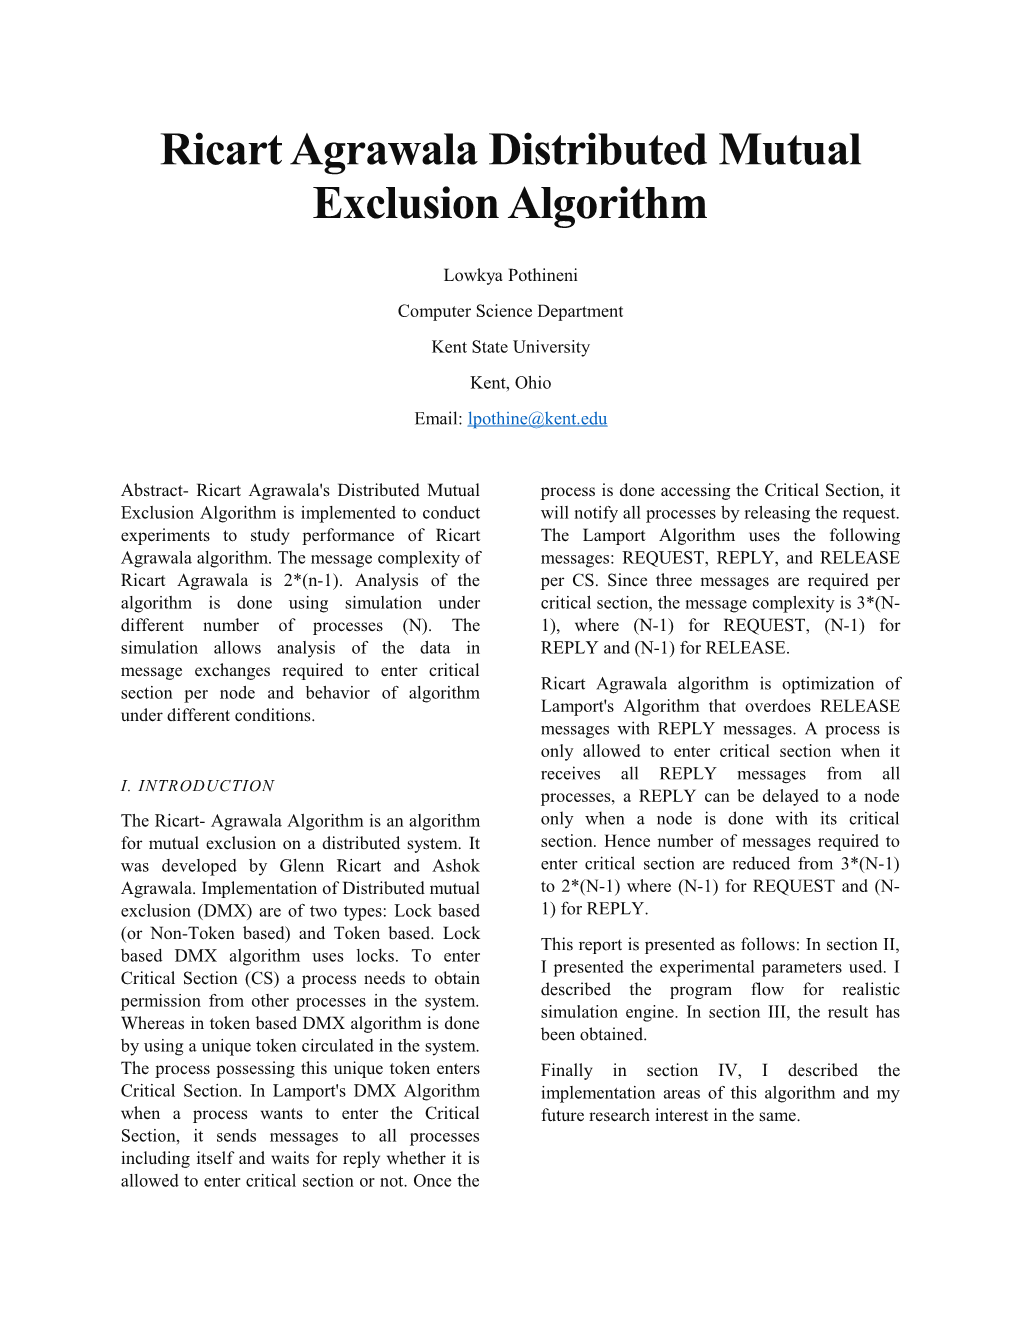 Ricart Agrawala Distributed Mutual Exclusion Algorithm